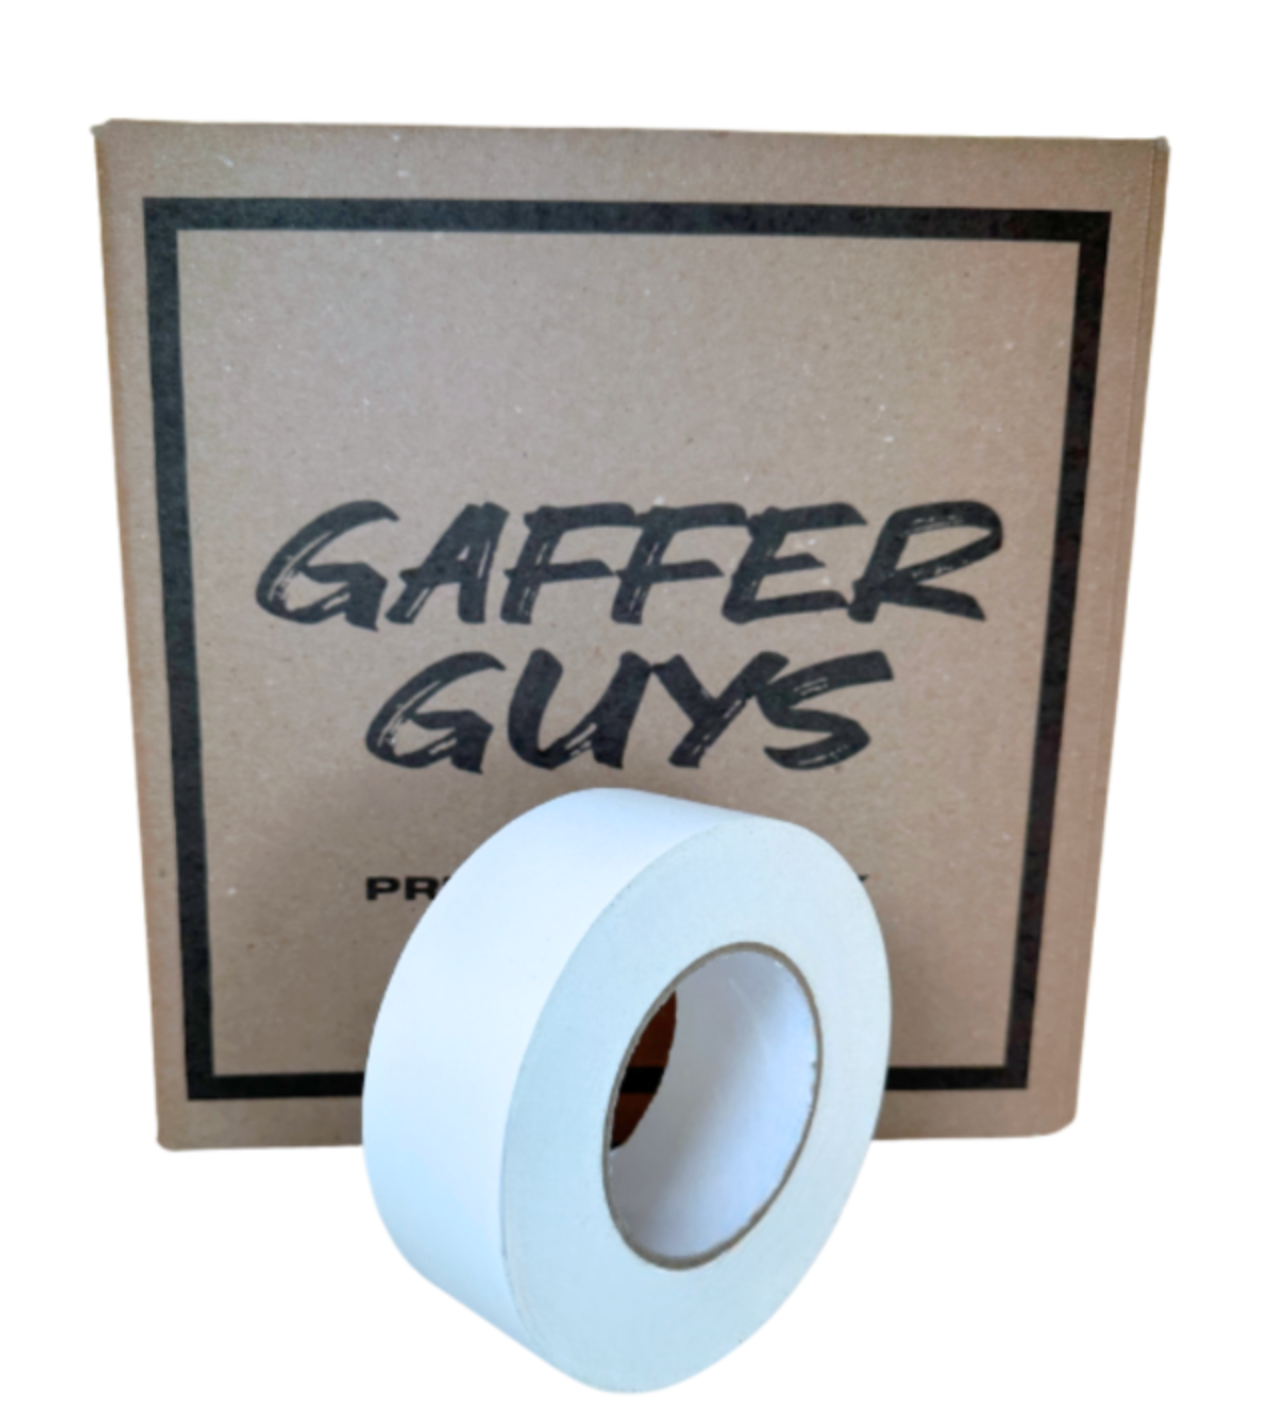 2" Gaff Tape - 24 Roll Case